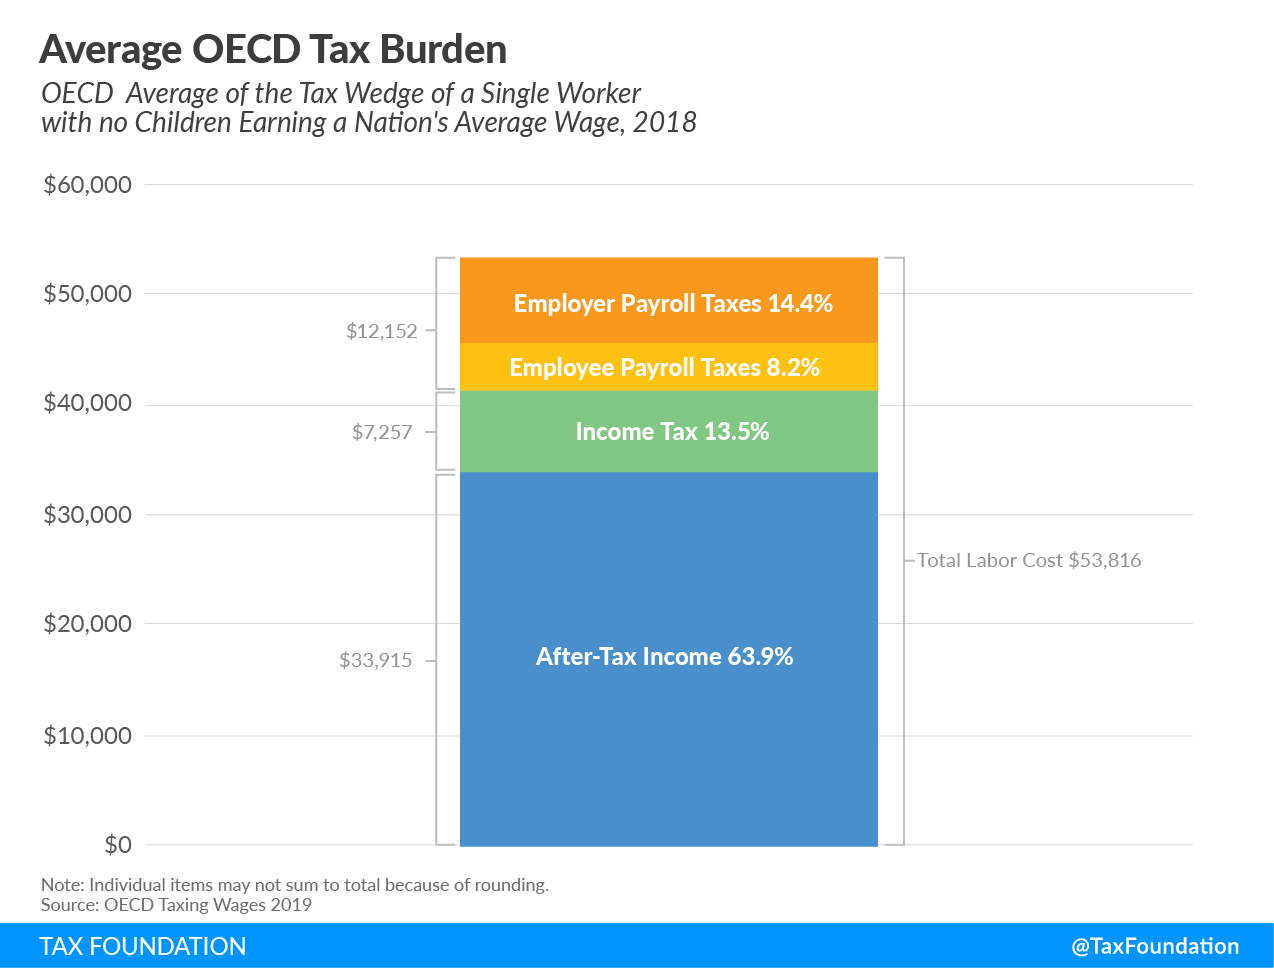 Average OECD Tax Burden, OECD average tax wedge